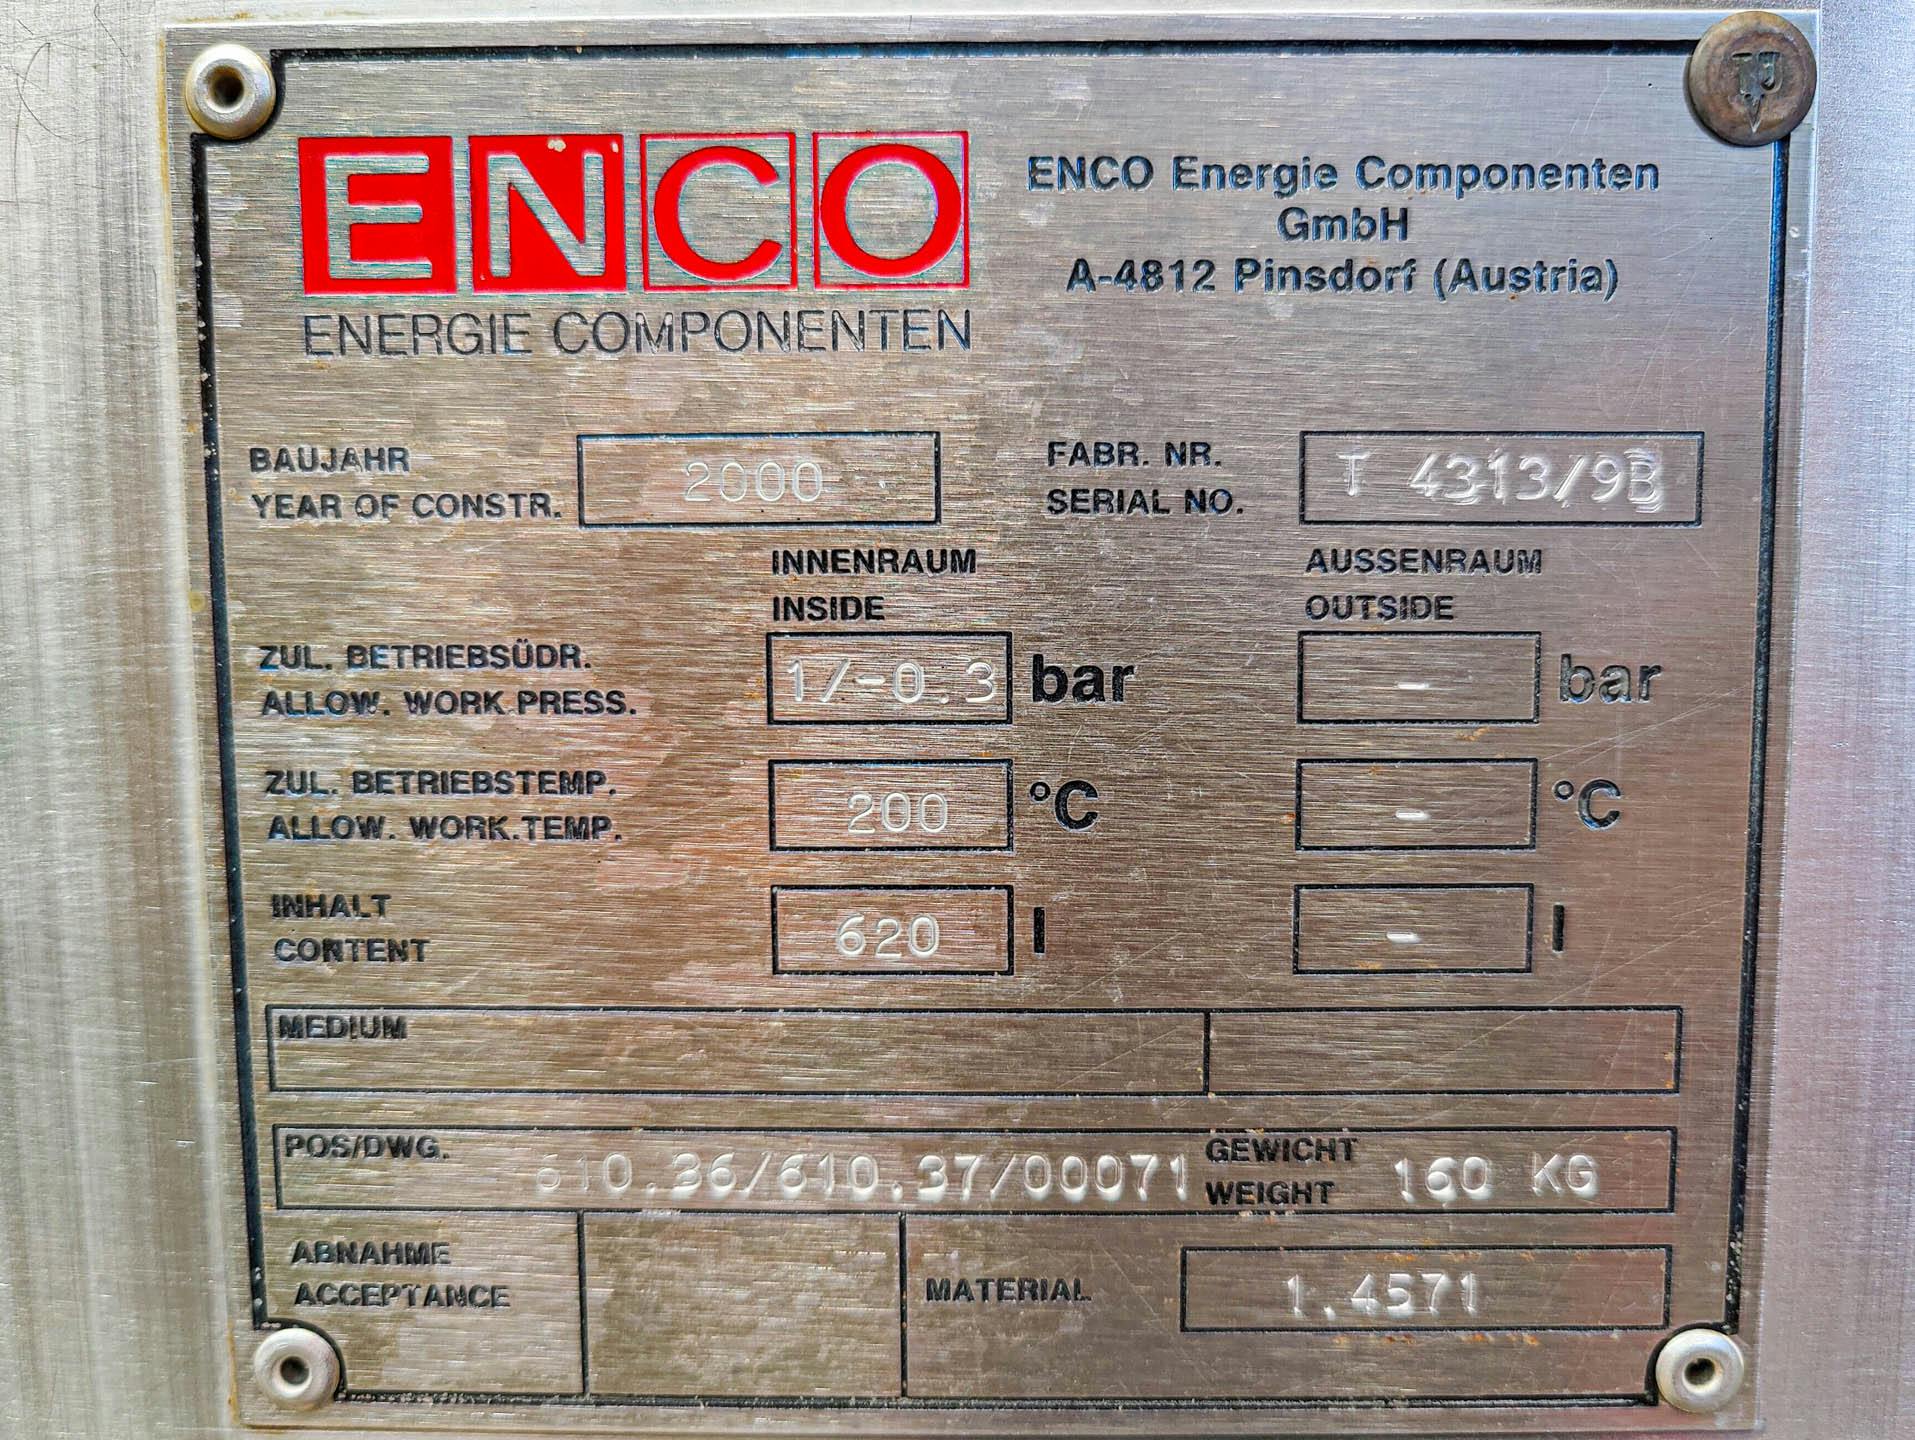 Enco 620 Ltr. - Recipiente de pressão - image 7